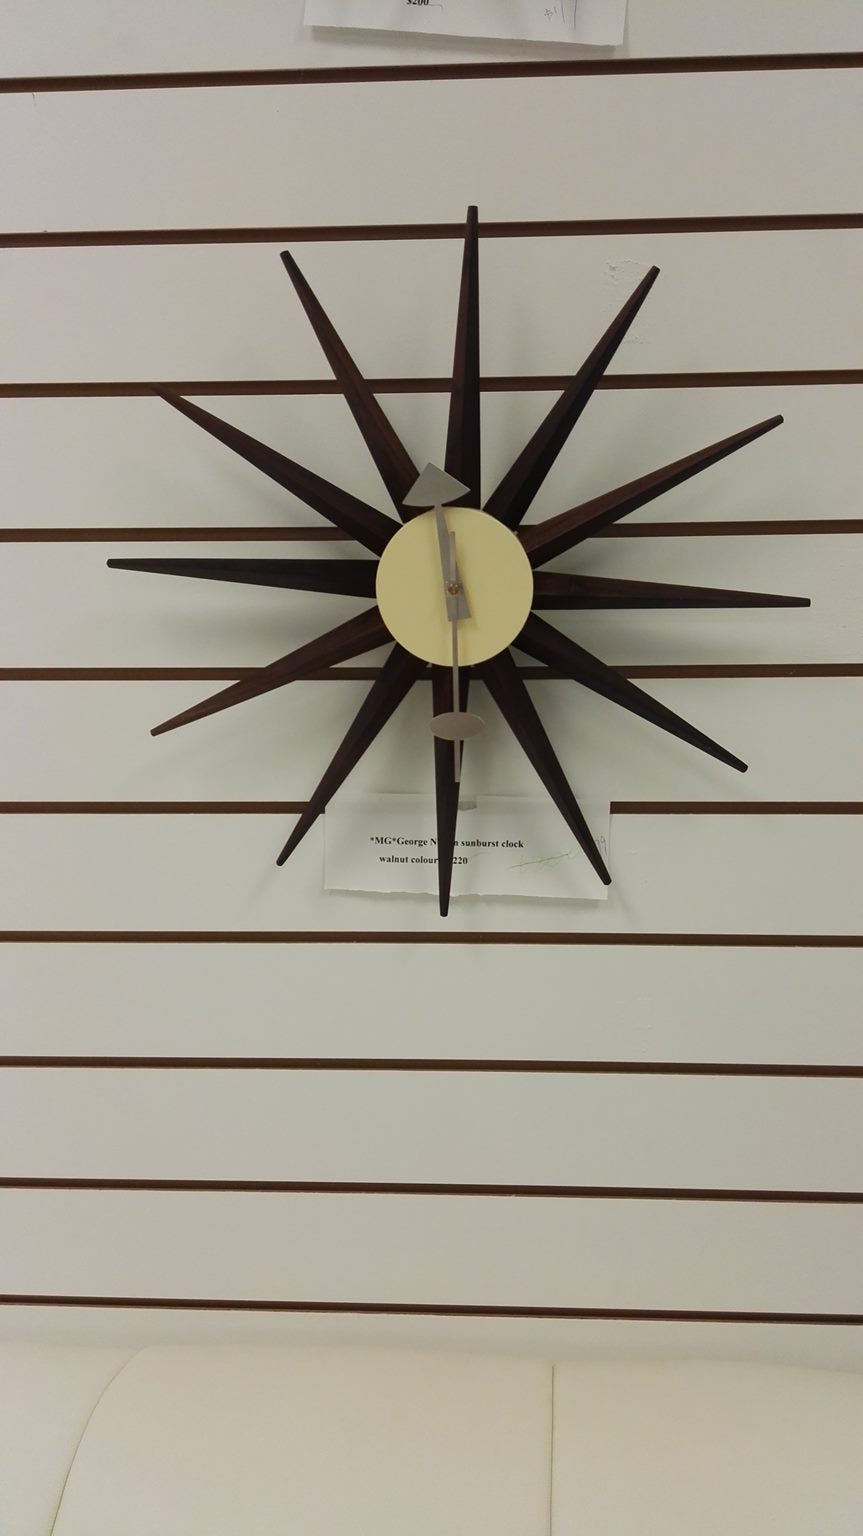 Replica Sunburst clock Walnut